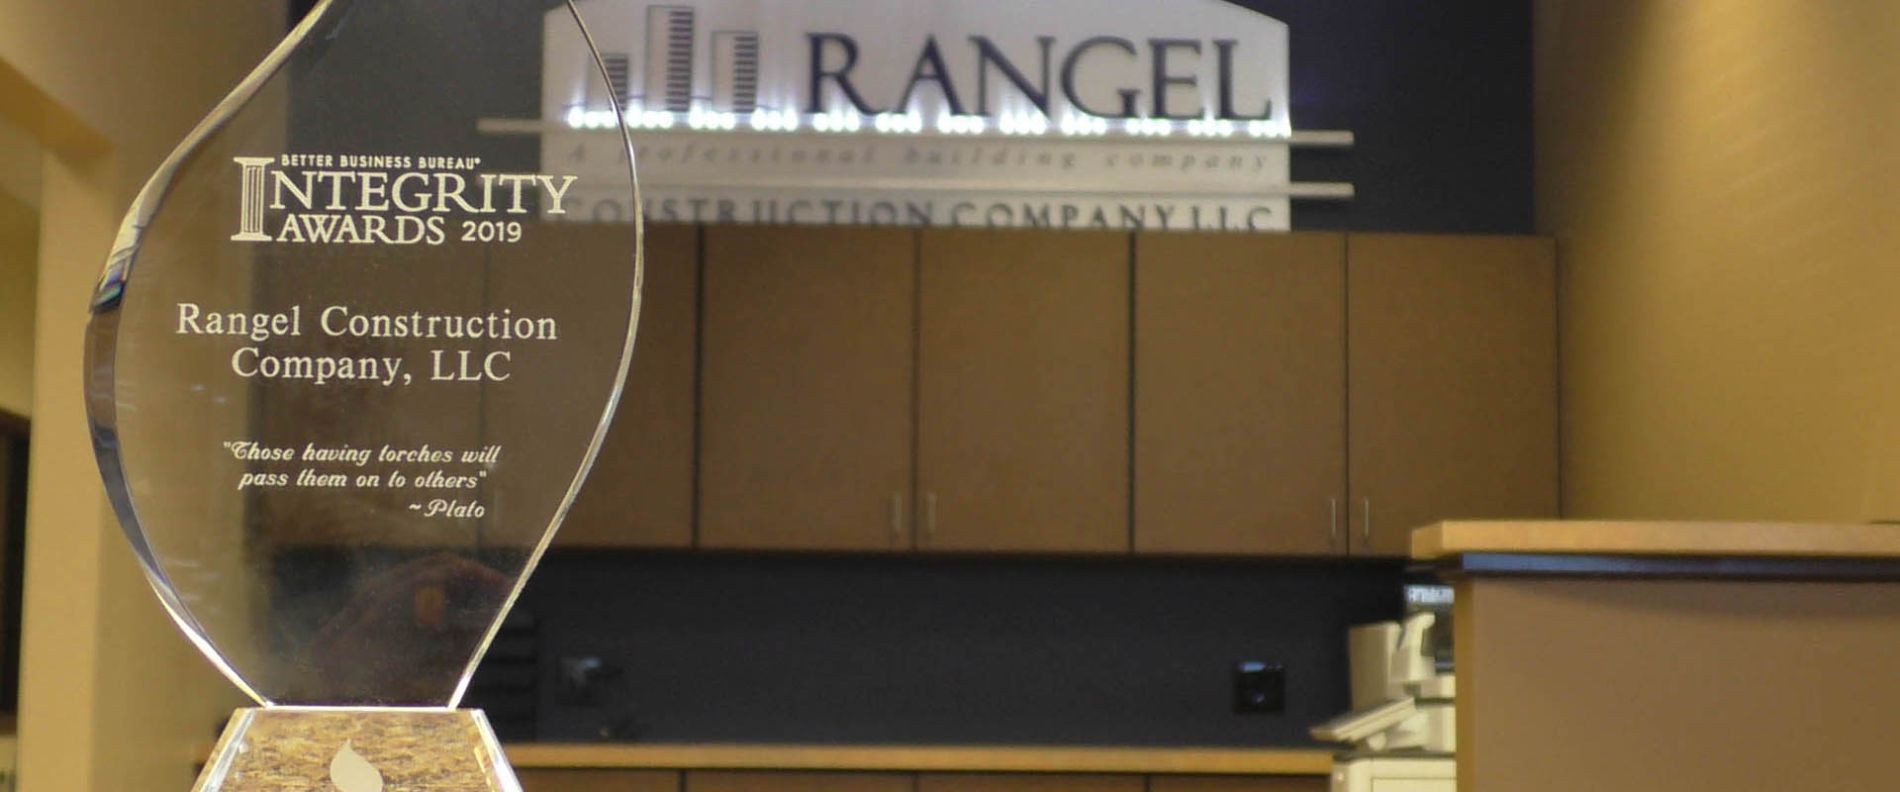 Rangel Construction Company wins Better Business Bureau Integrity Award for 2019.